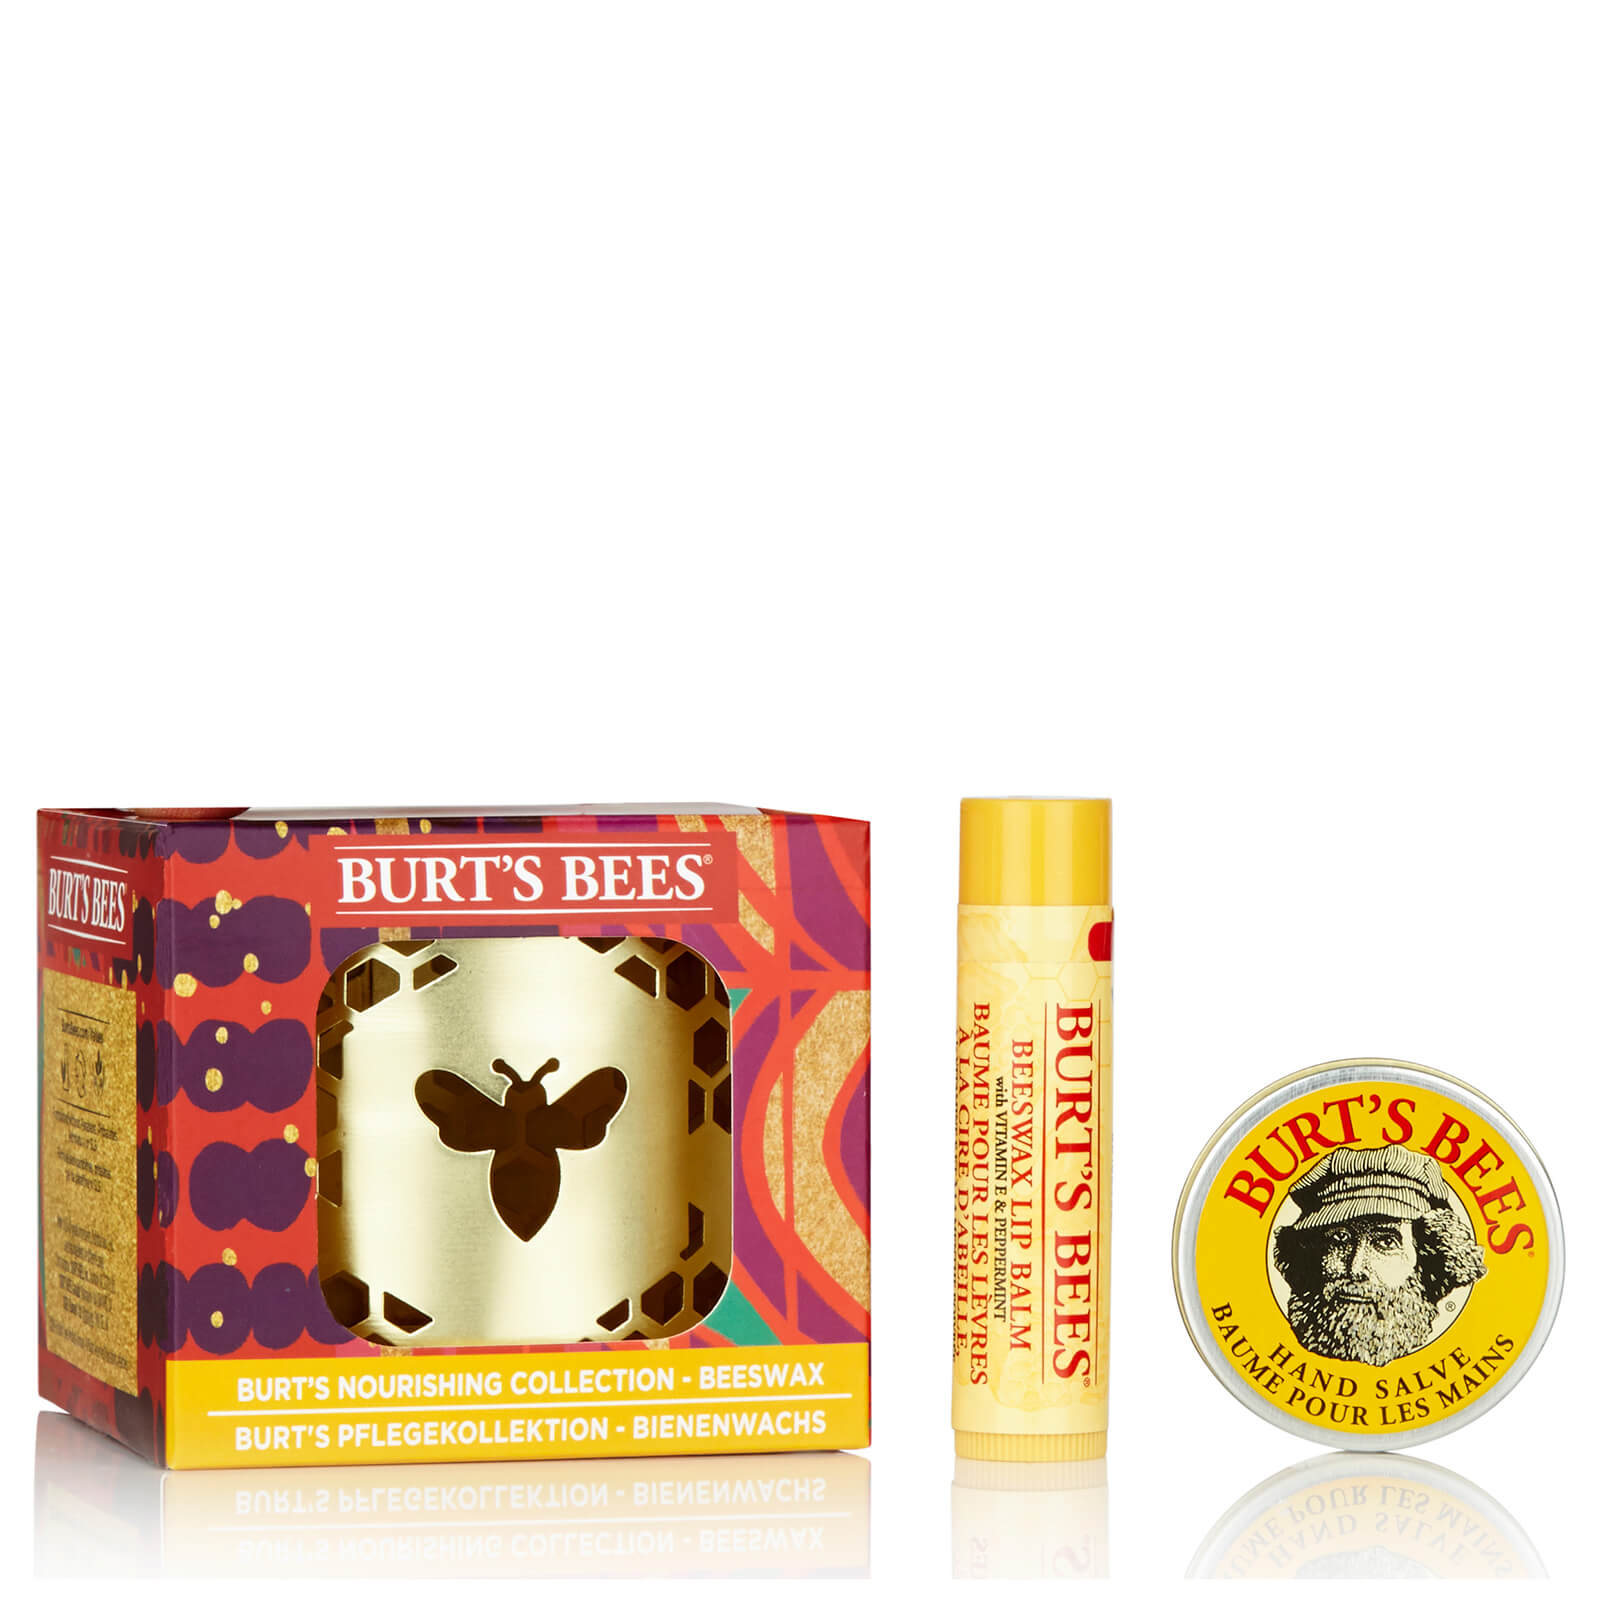 Burt's Bees Nourishing Collection - Beeswax